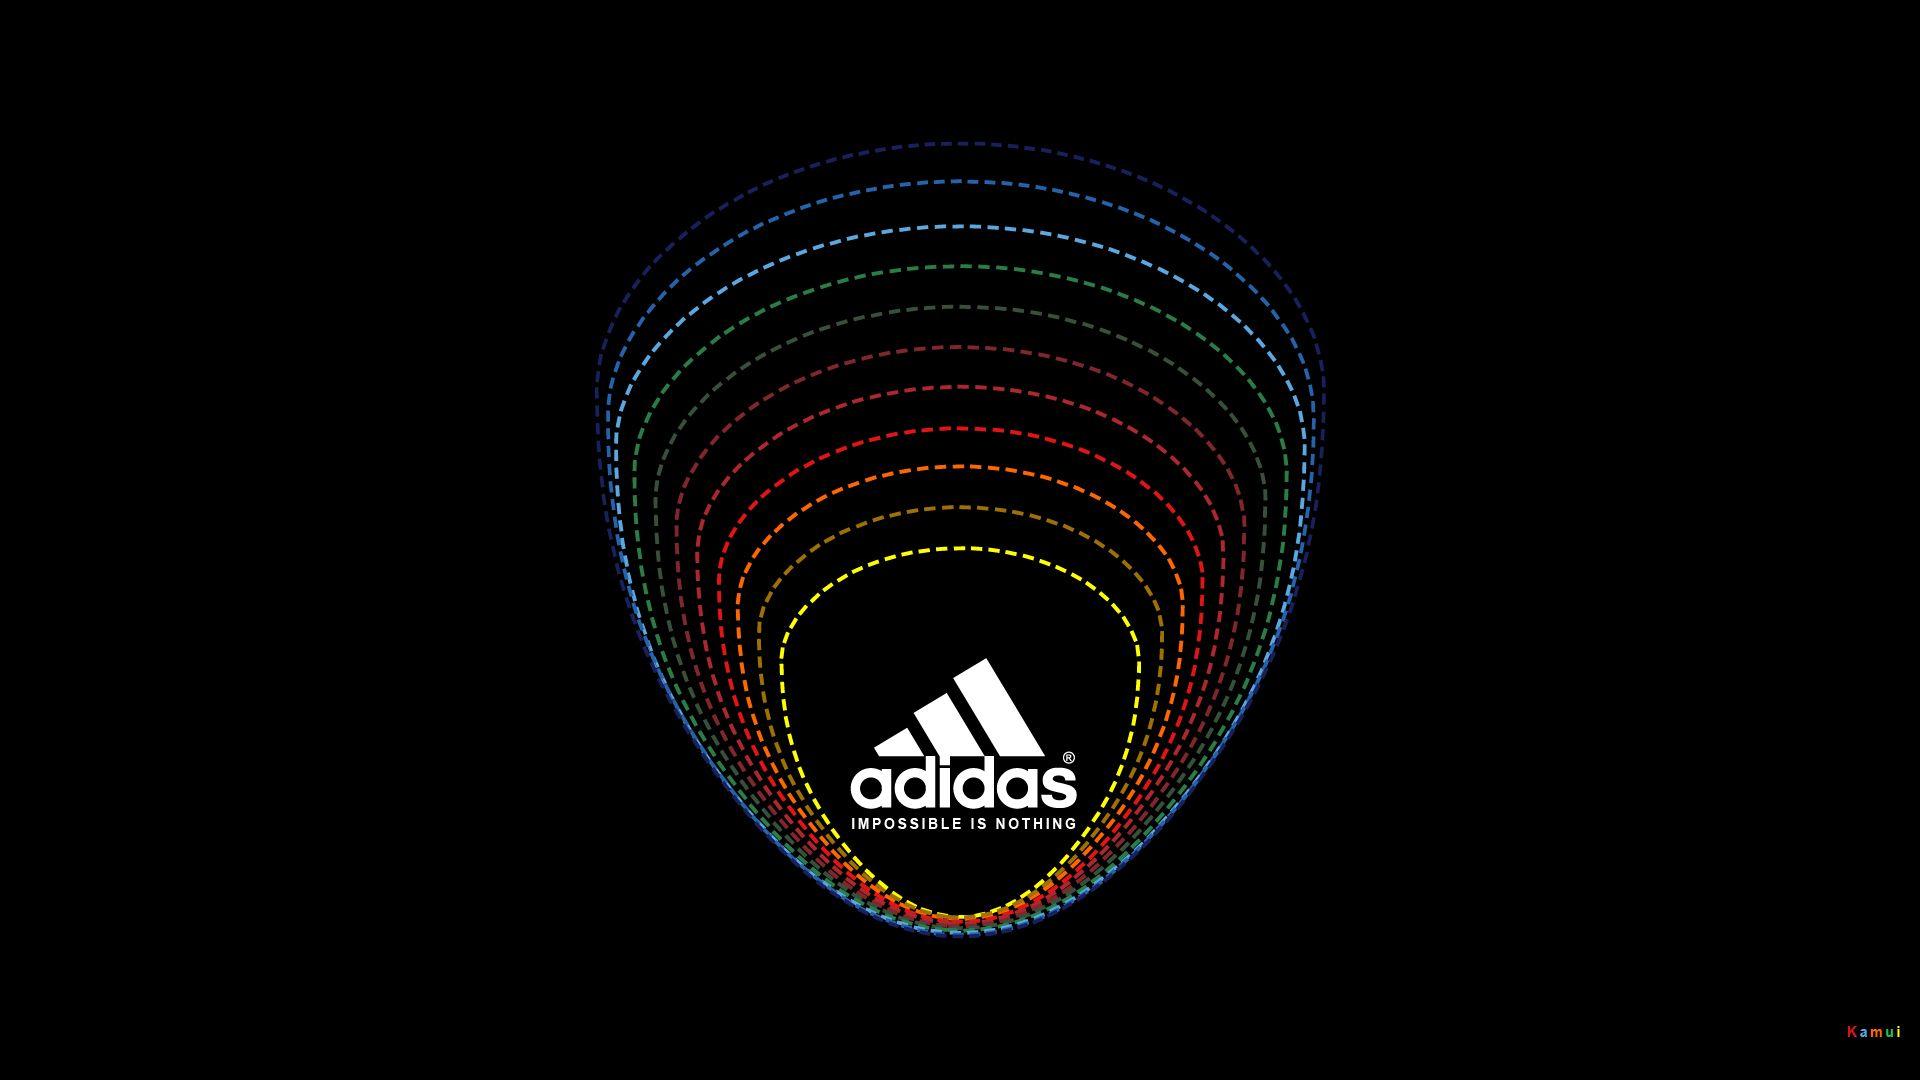 Adidas Wallpaper High Quality